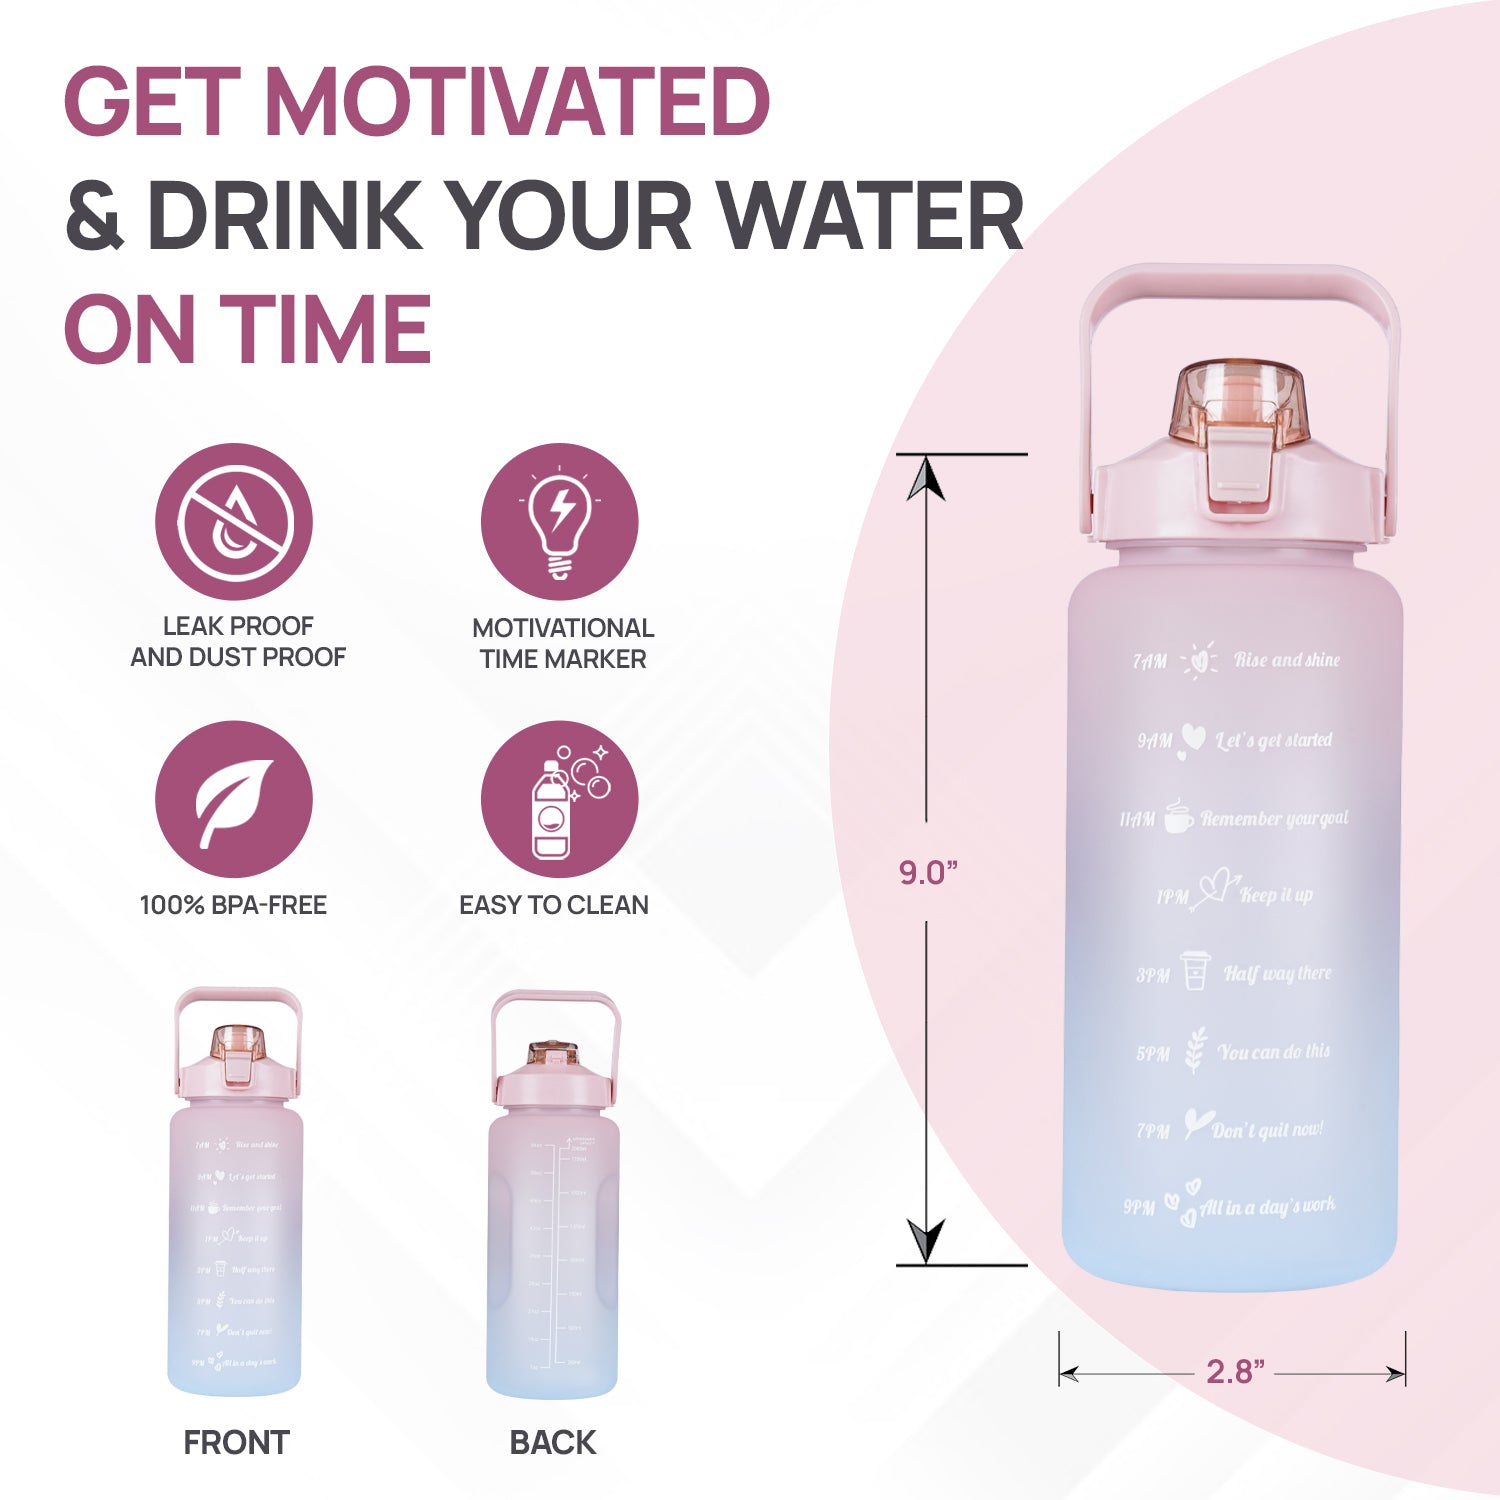 SKYTONE 2Ltr Motivational GYM Water Bottle